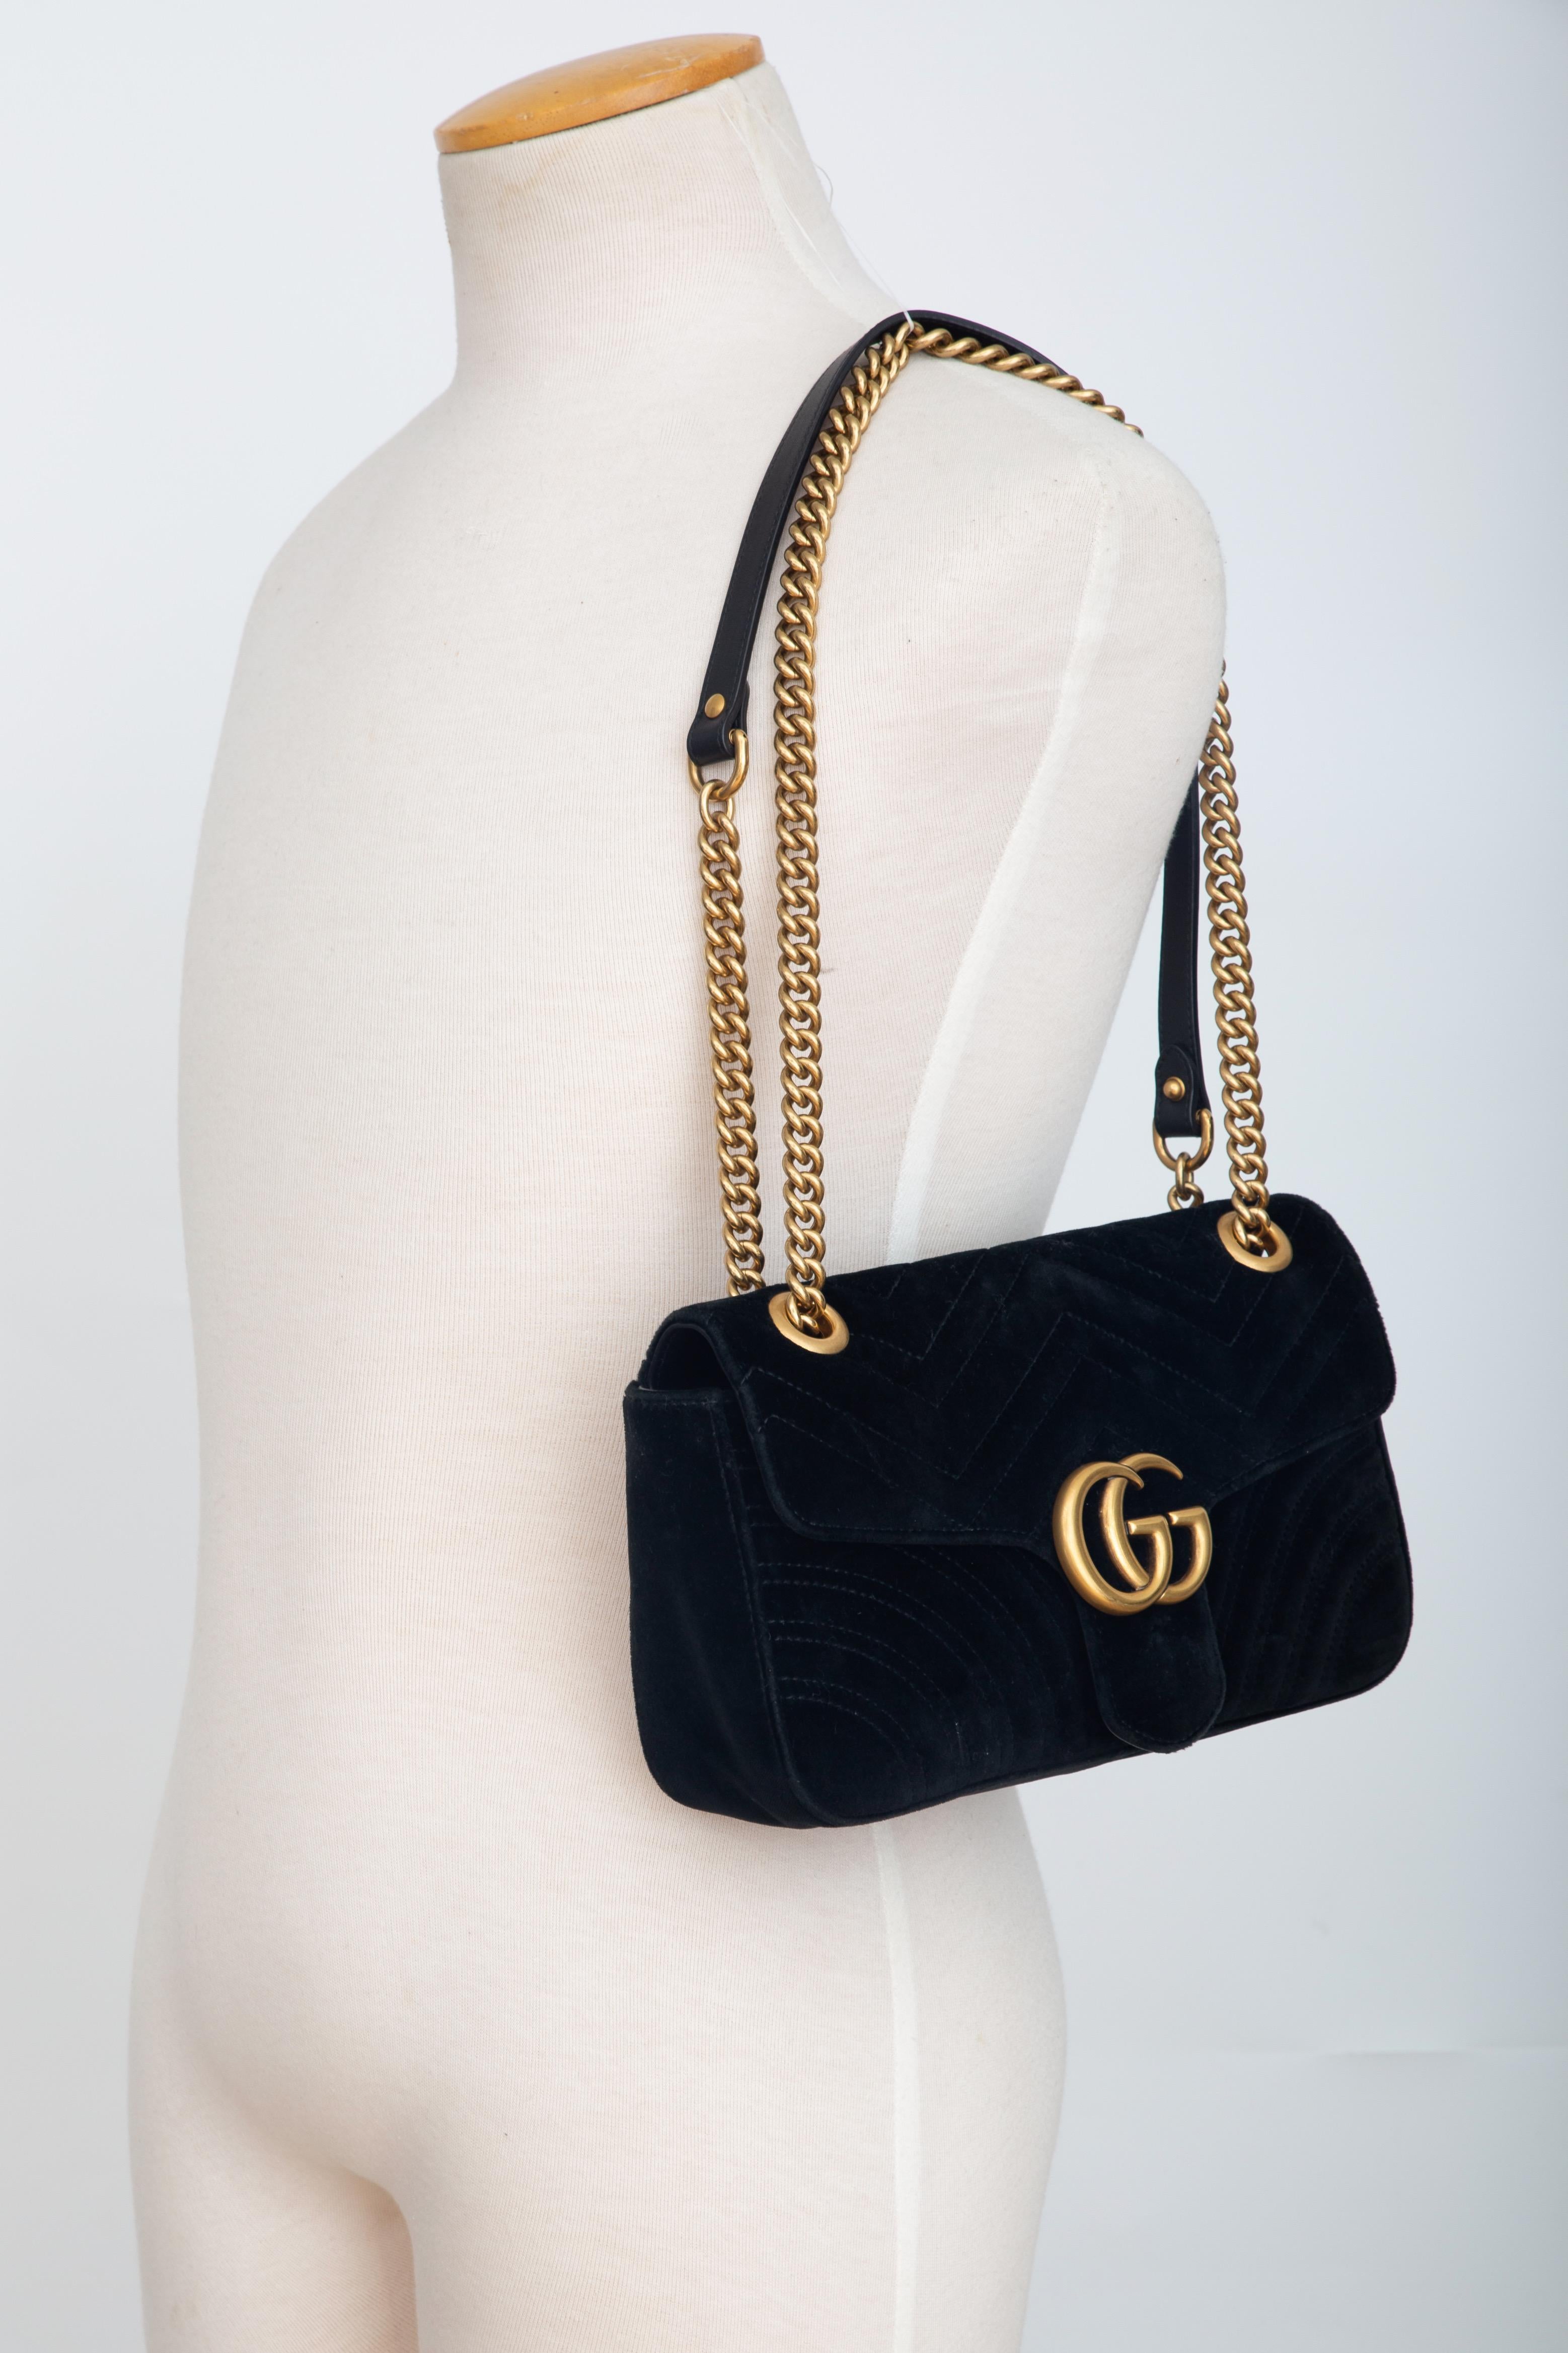 Gucci Velvet Black Matelasse Small GG Marmont Shoulder Bag (443497) 3